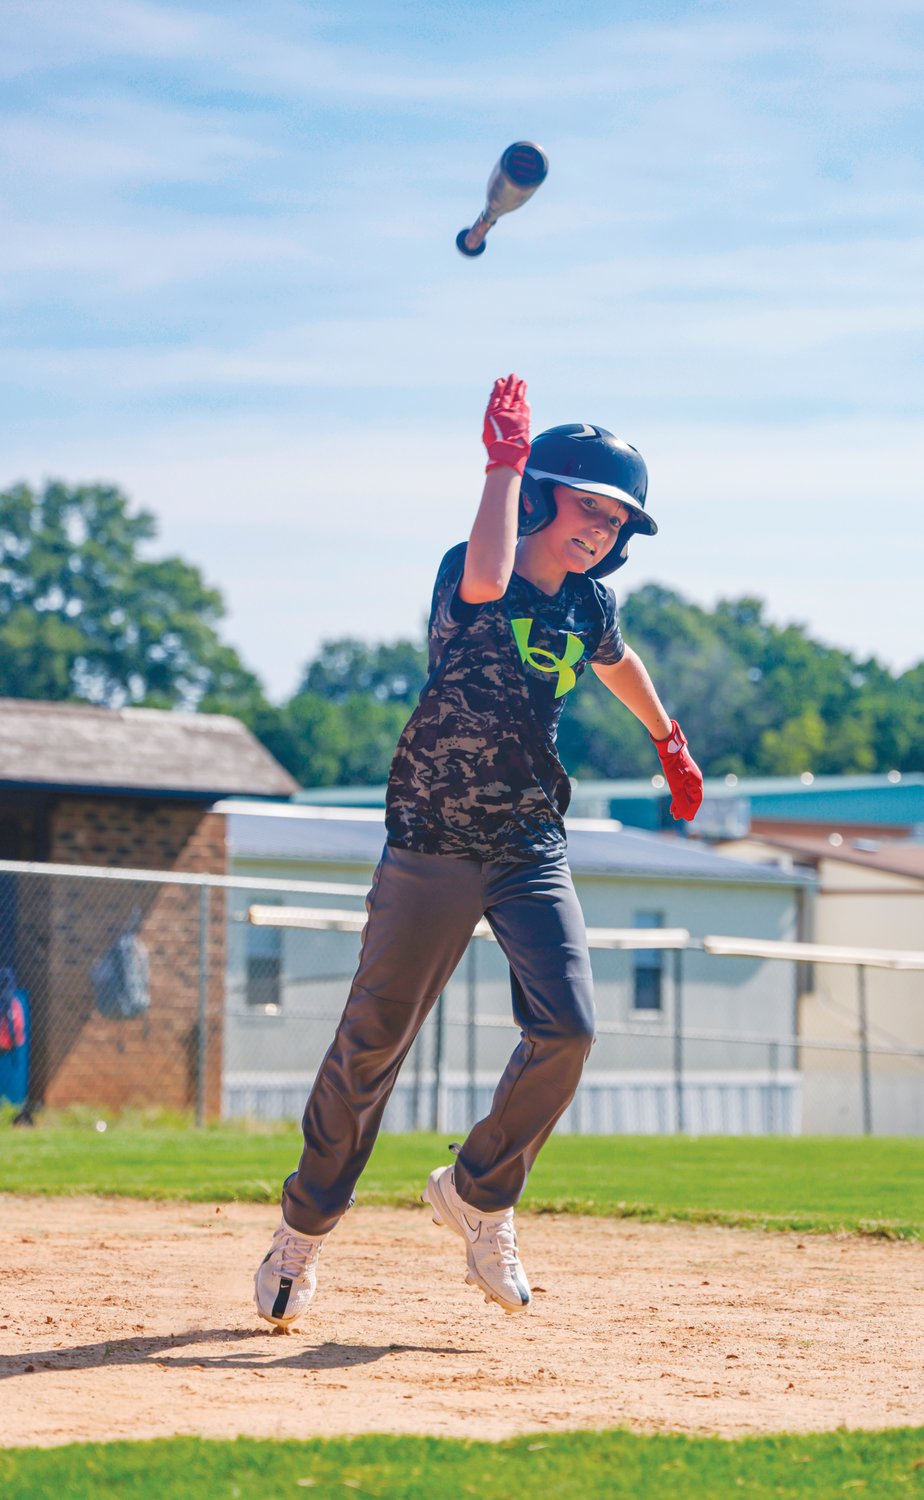 Hayden, a camper at Jordan-Matthews' annual baseball camp, flips his bat after a hit during the camp's final day last Thursday.